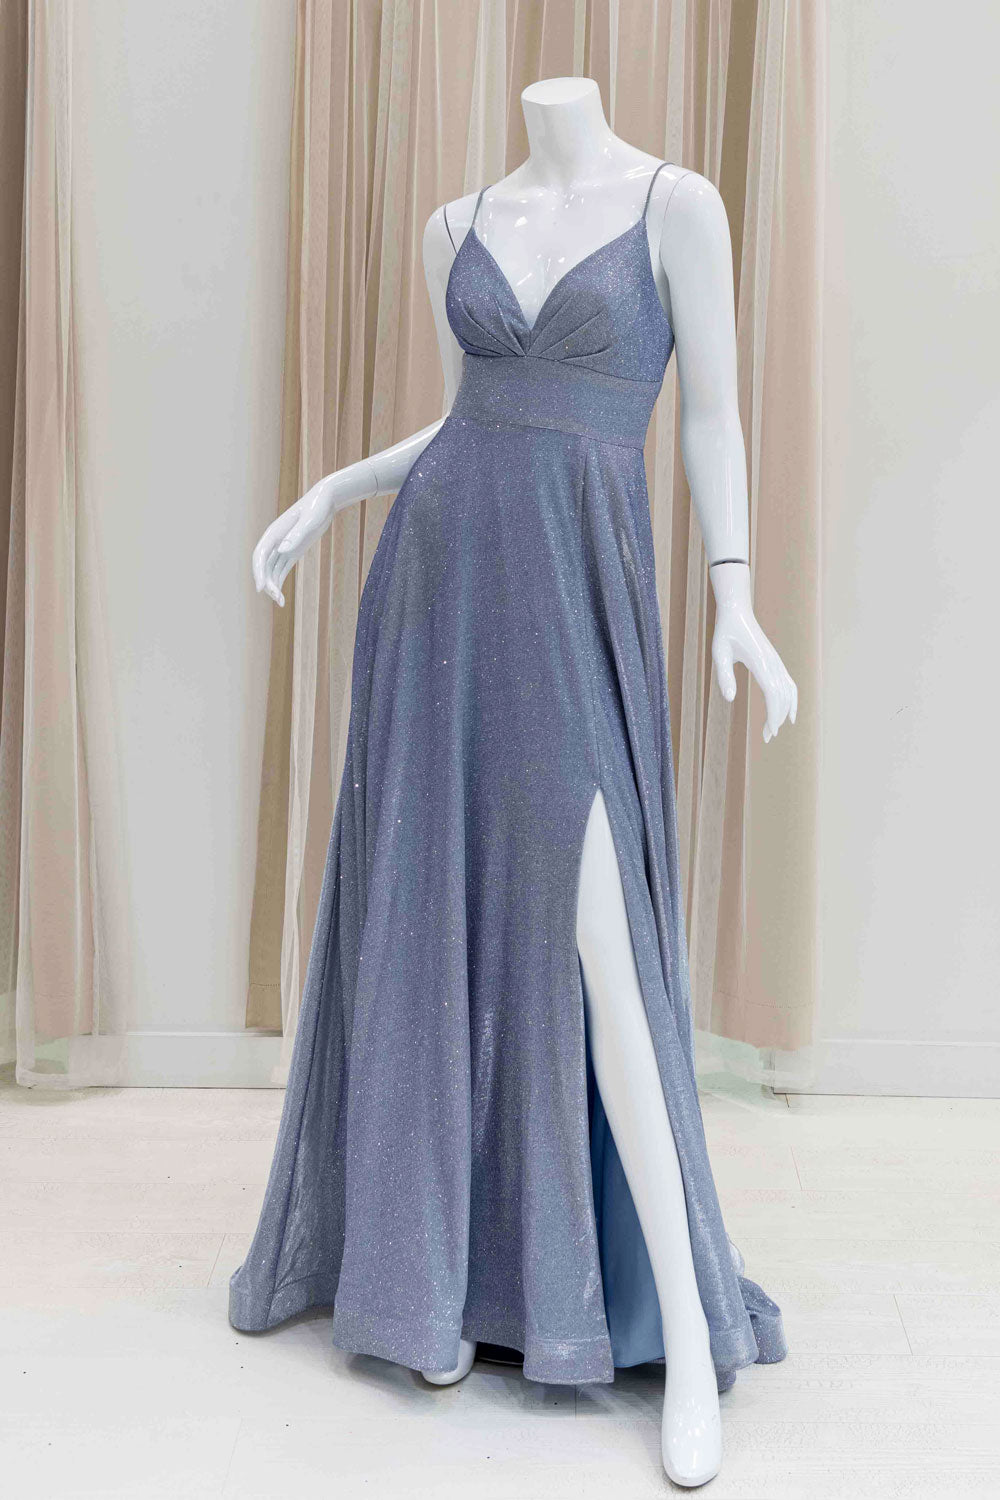 Simple Glitter Bridesmaids Dress in Light Blue